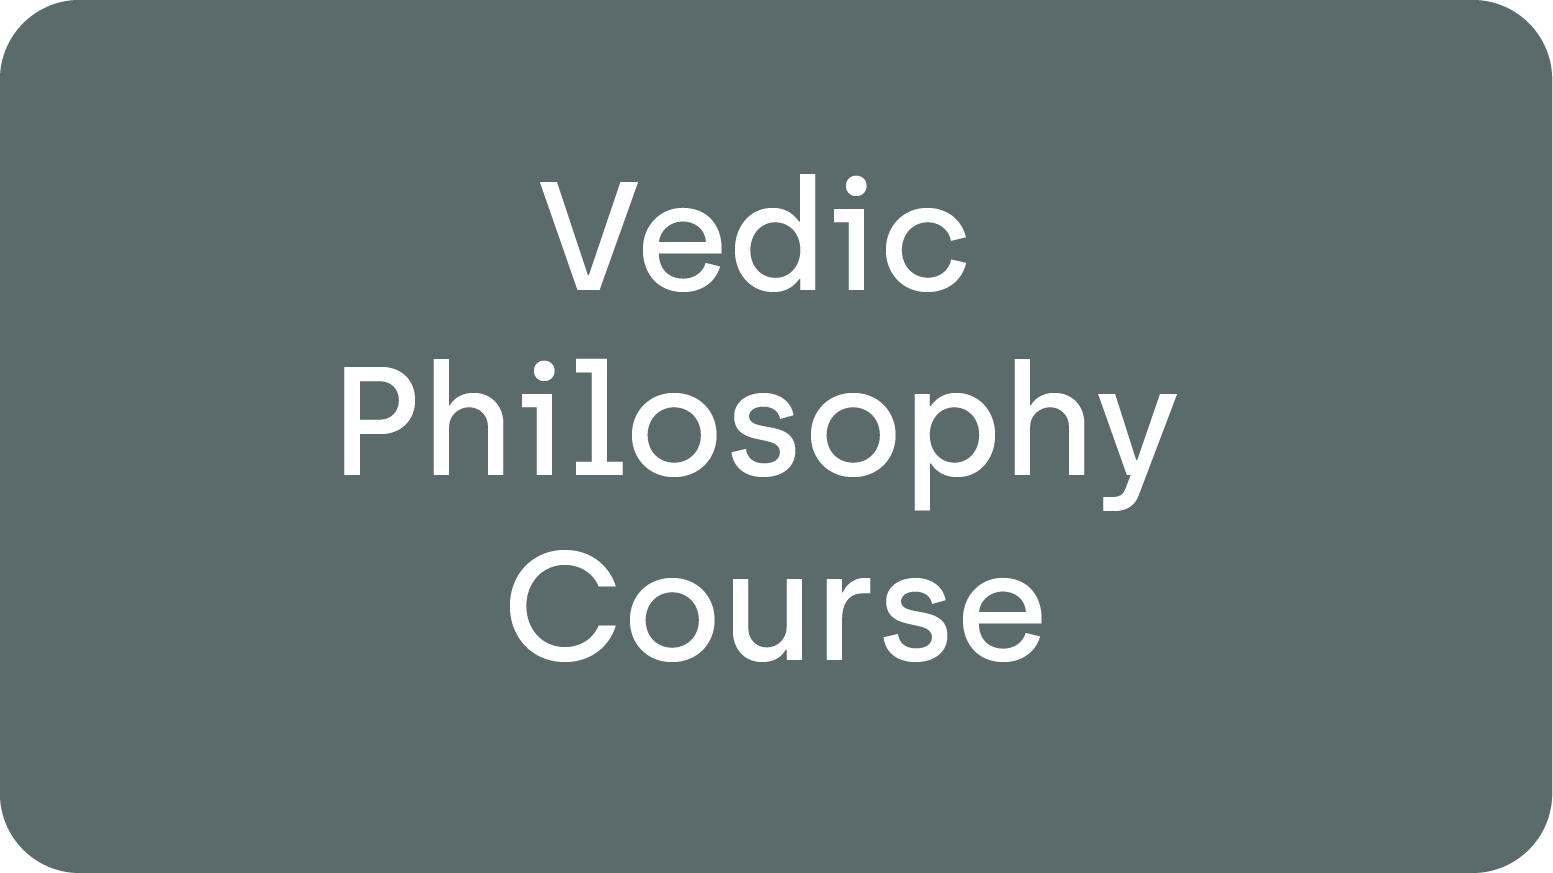 Vedic Philosophy Course